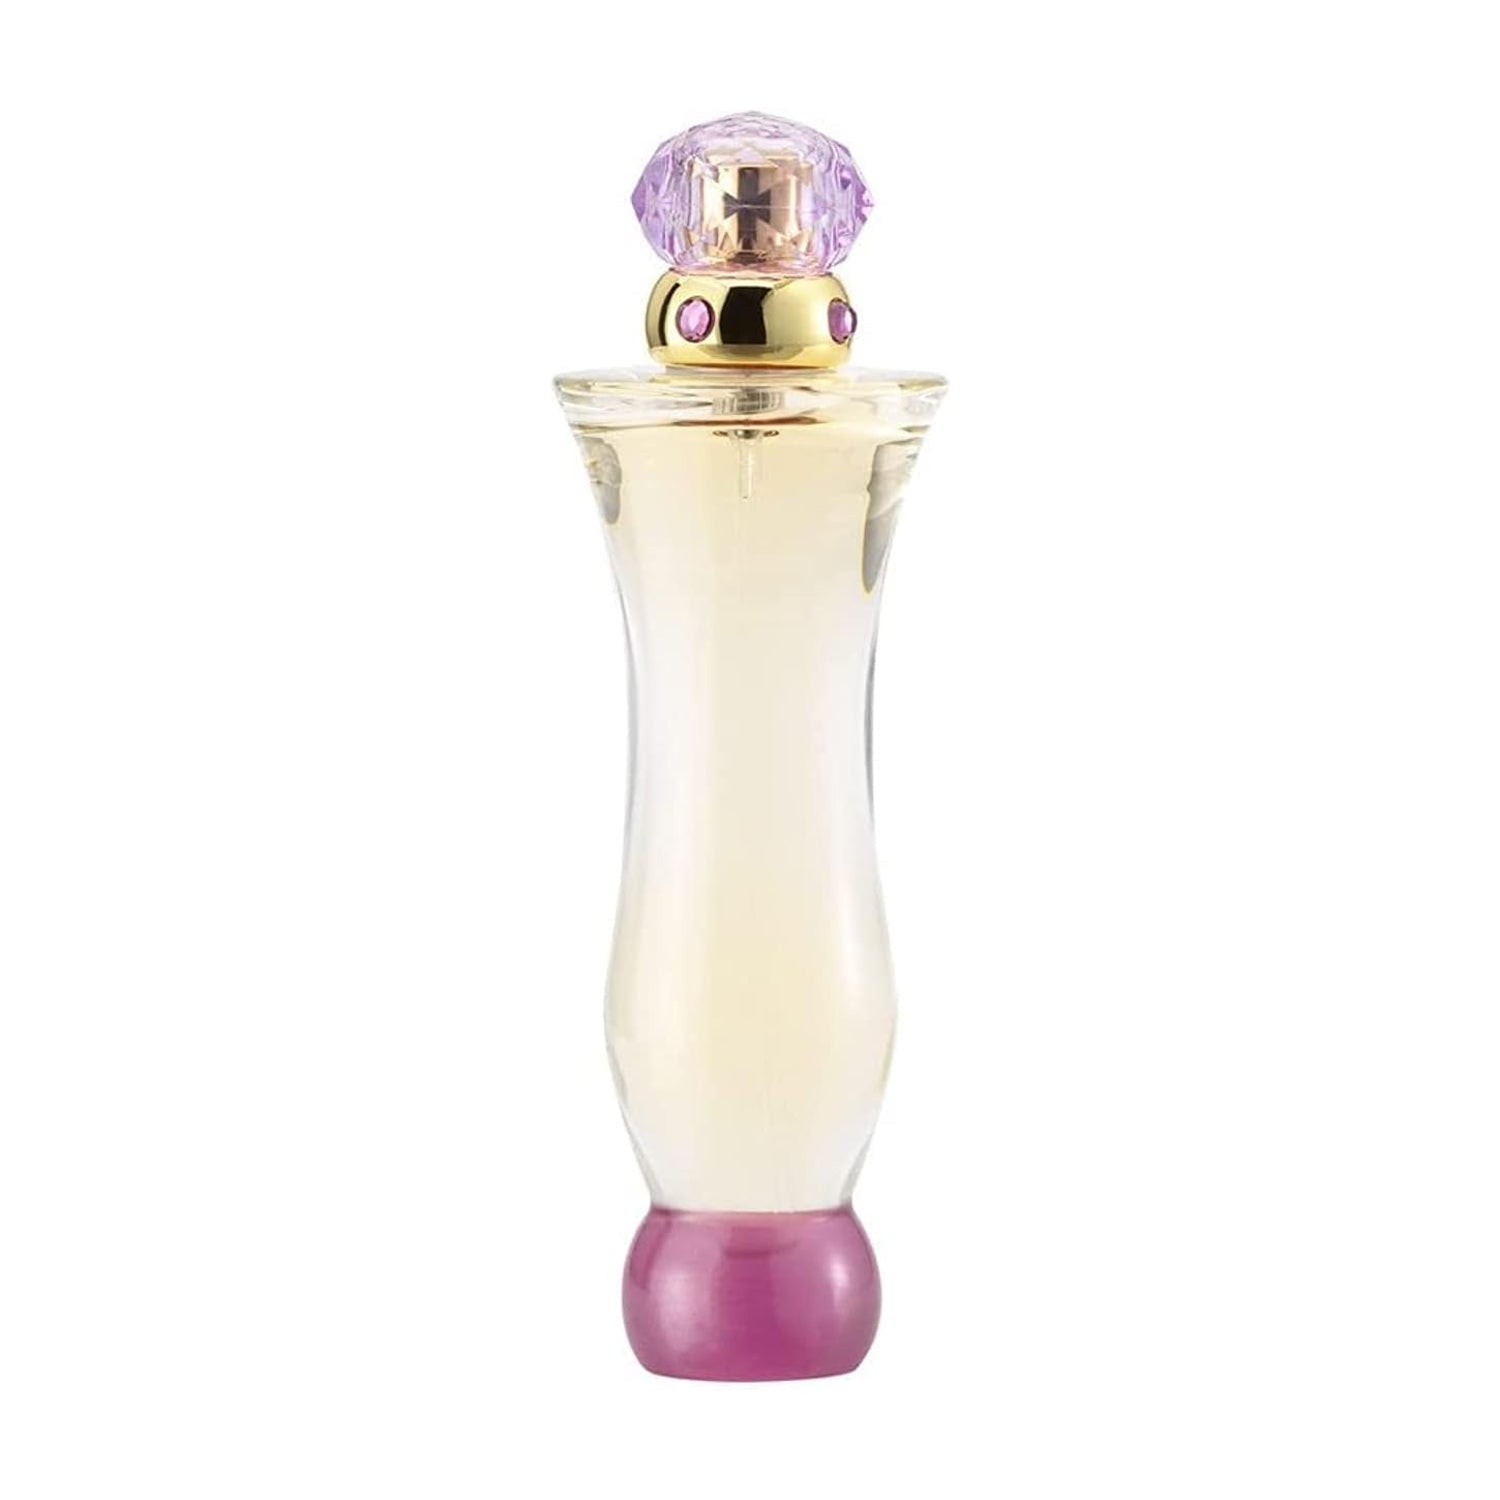 Versace Woman Eau De Perfume Spray for Women